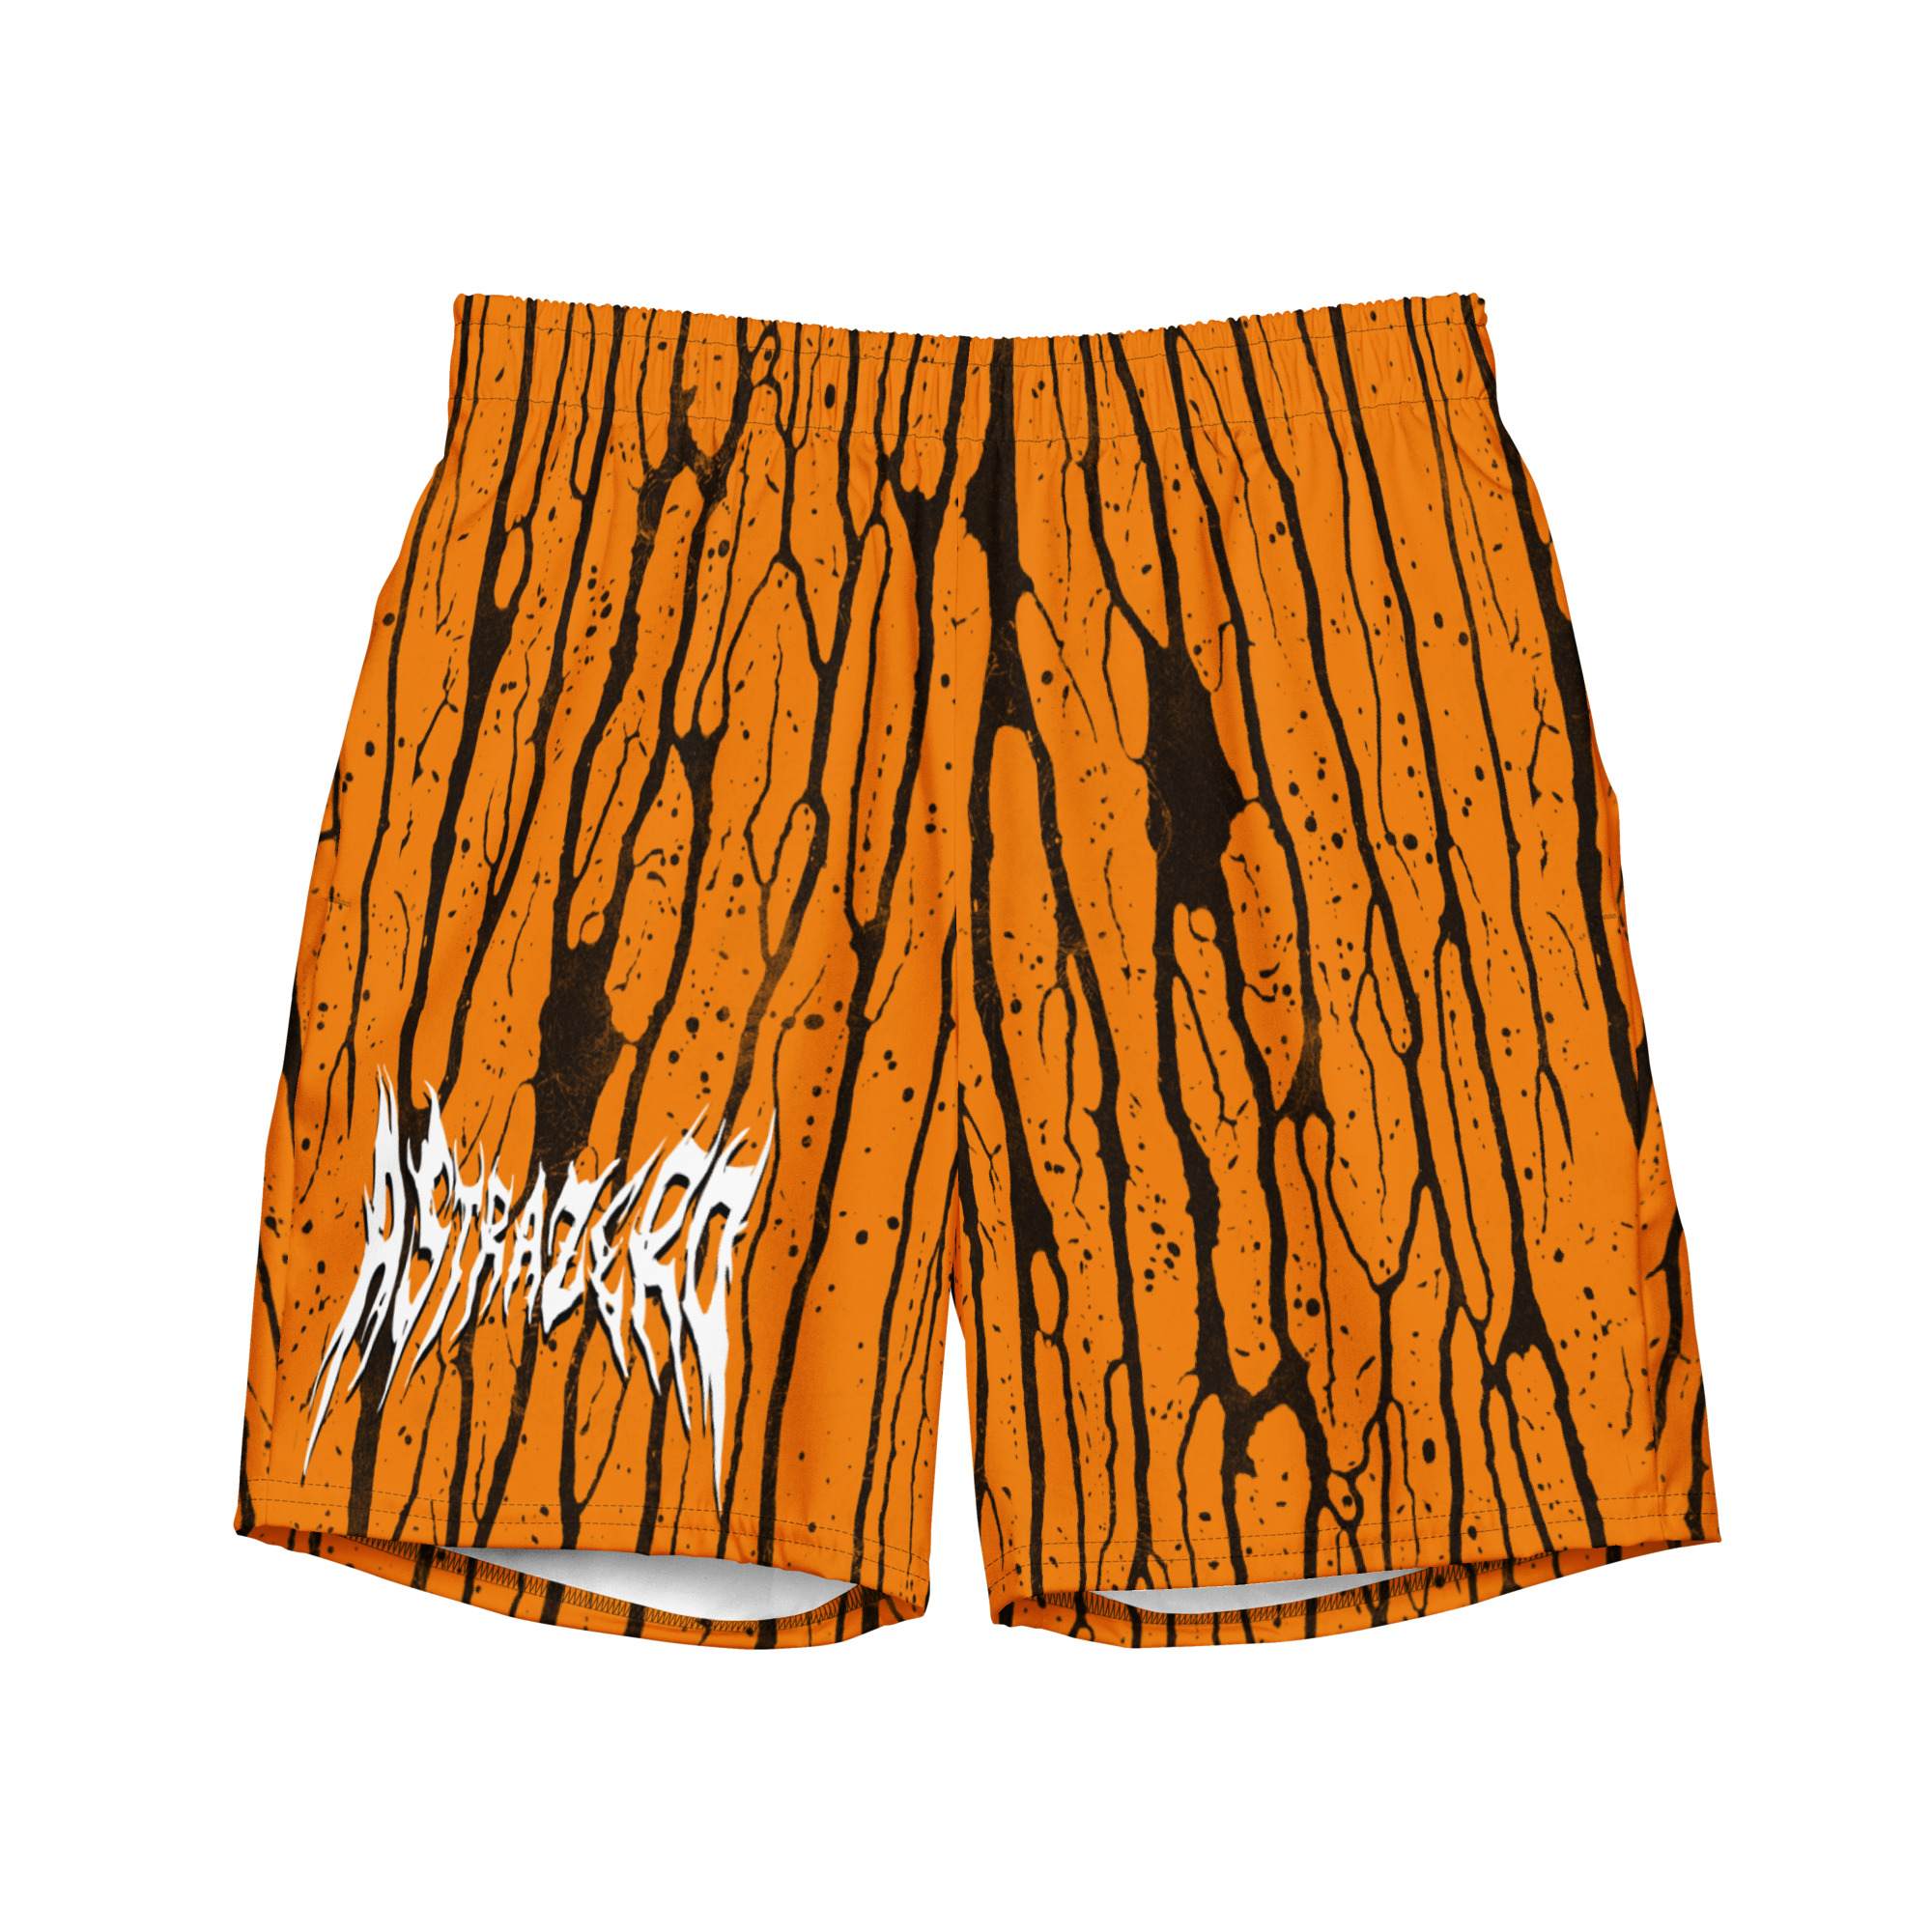 Featured image for “Grunge drip Orange - Men's swim trunks”